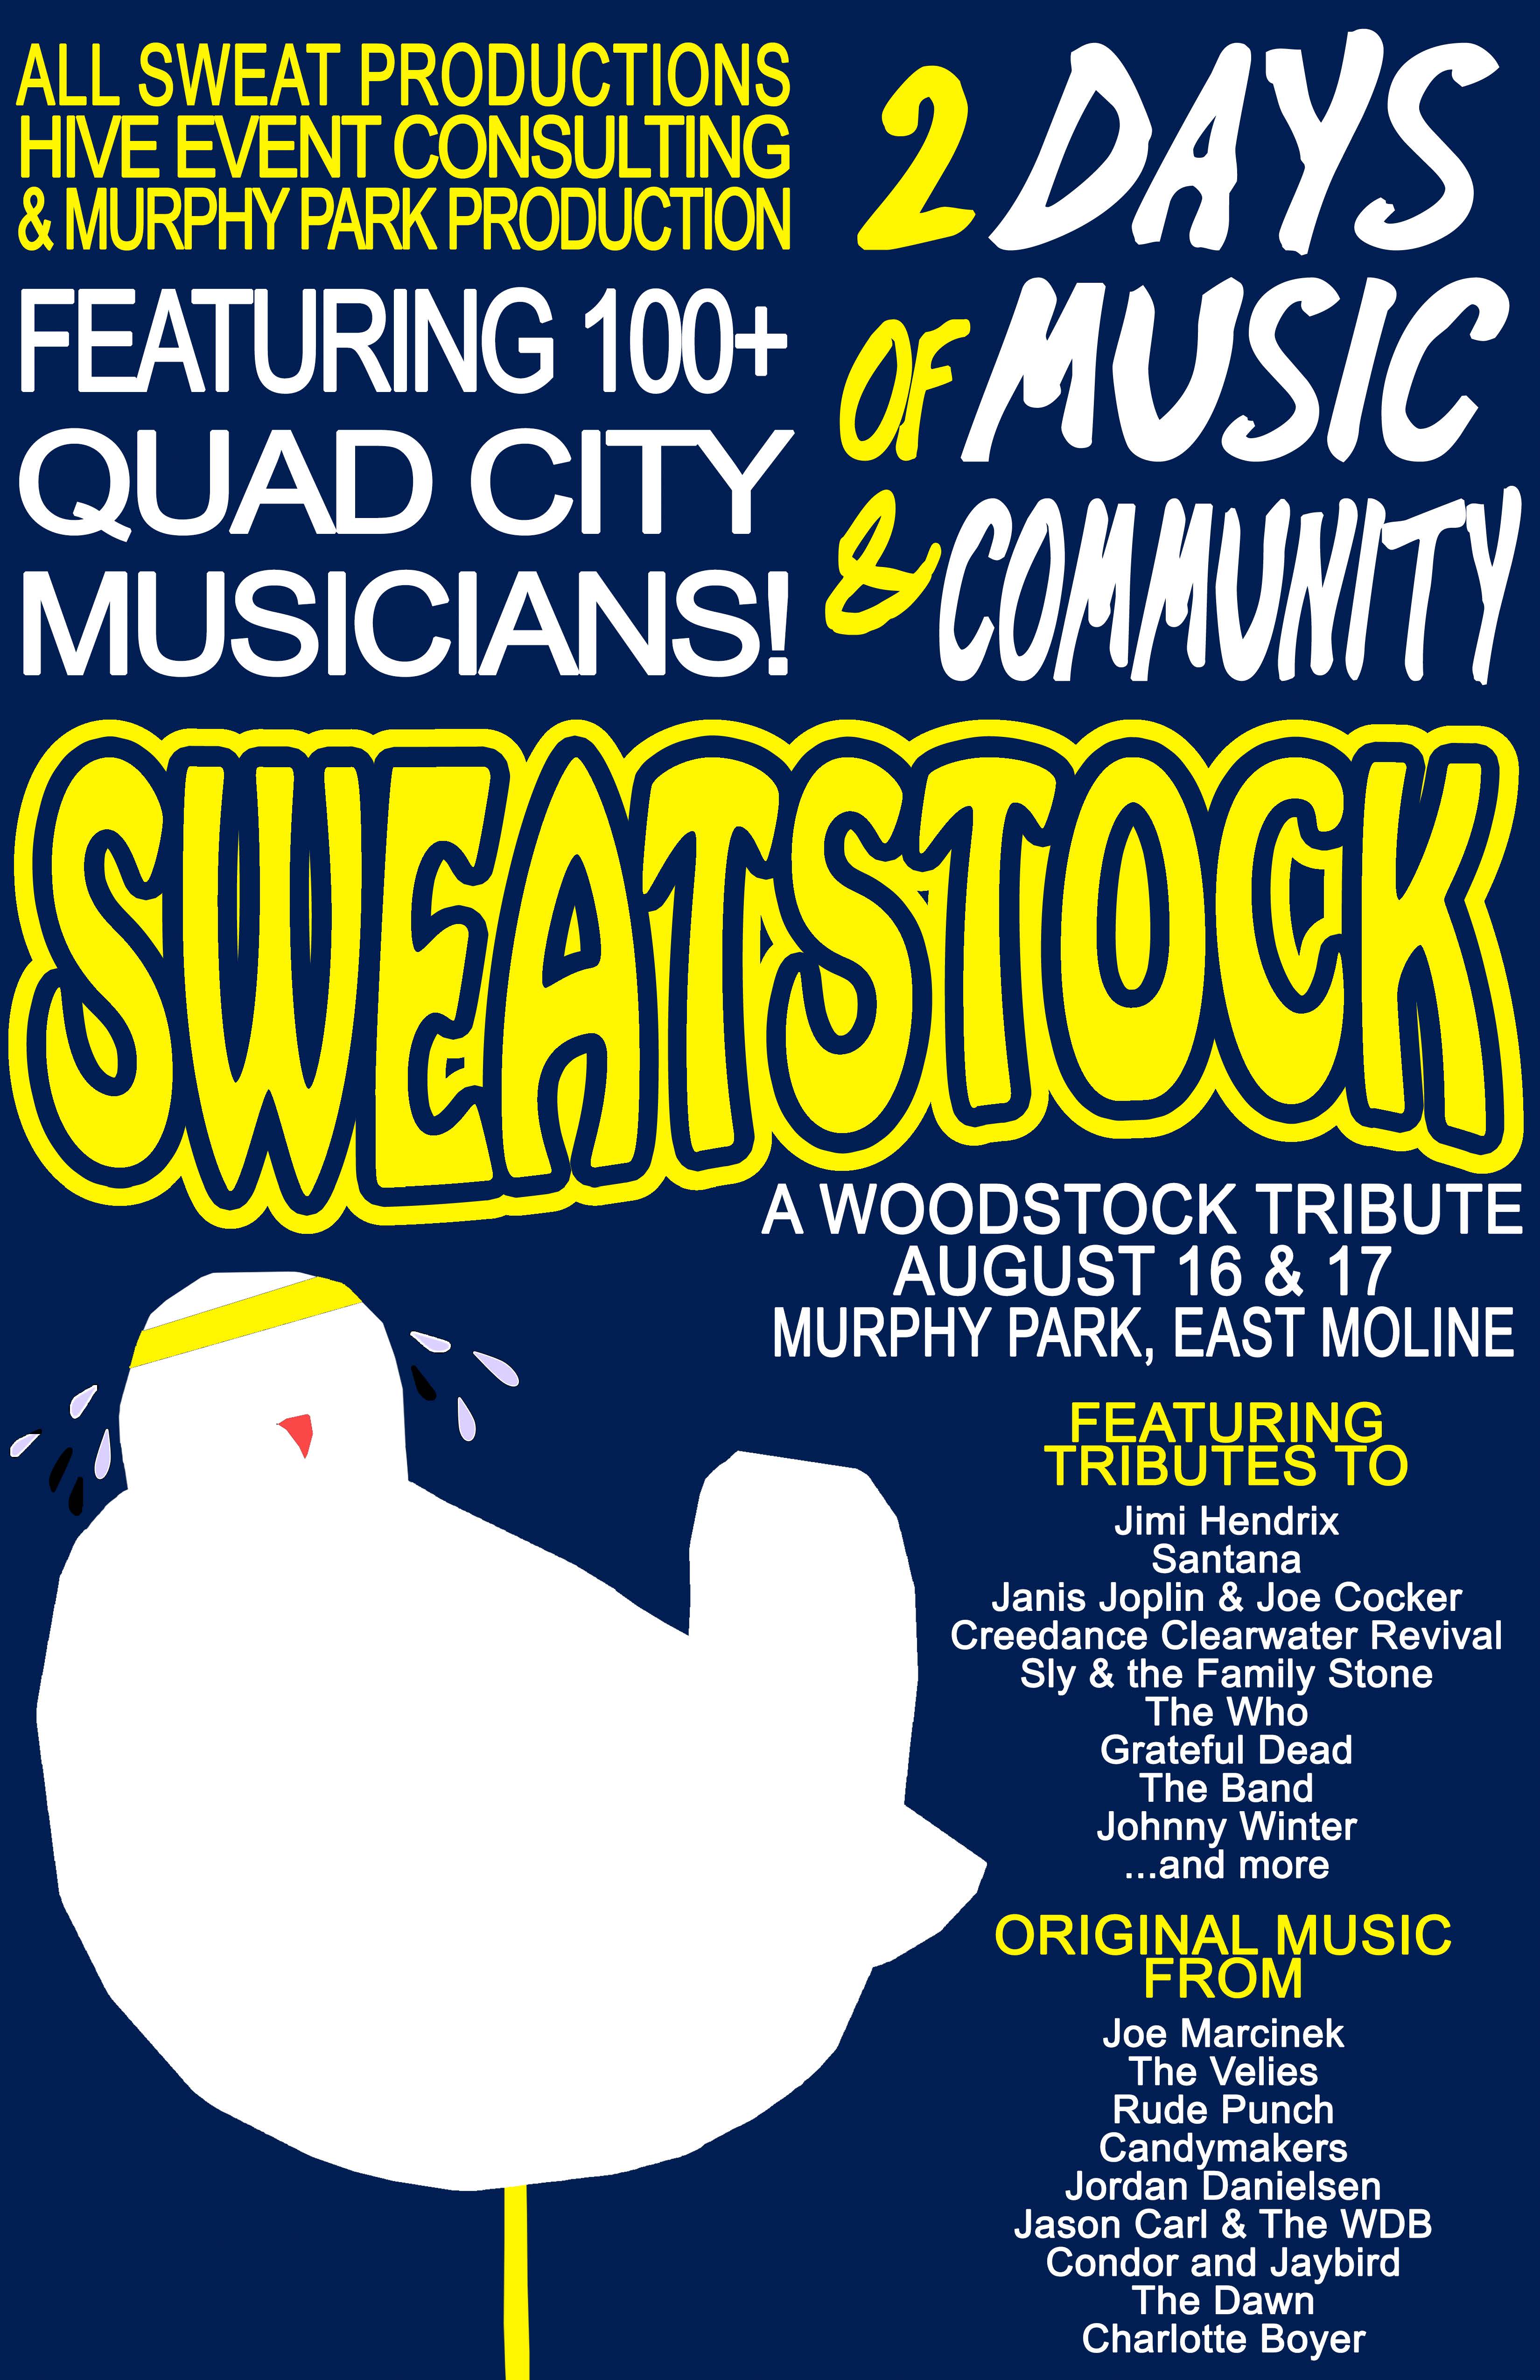 Sweatstock 50th Anniversary Woodstock Tribute Coming to Quad Cities